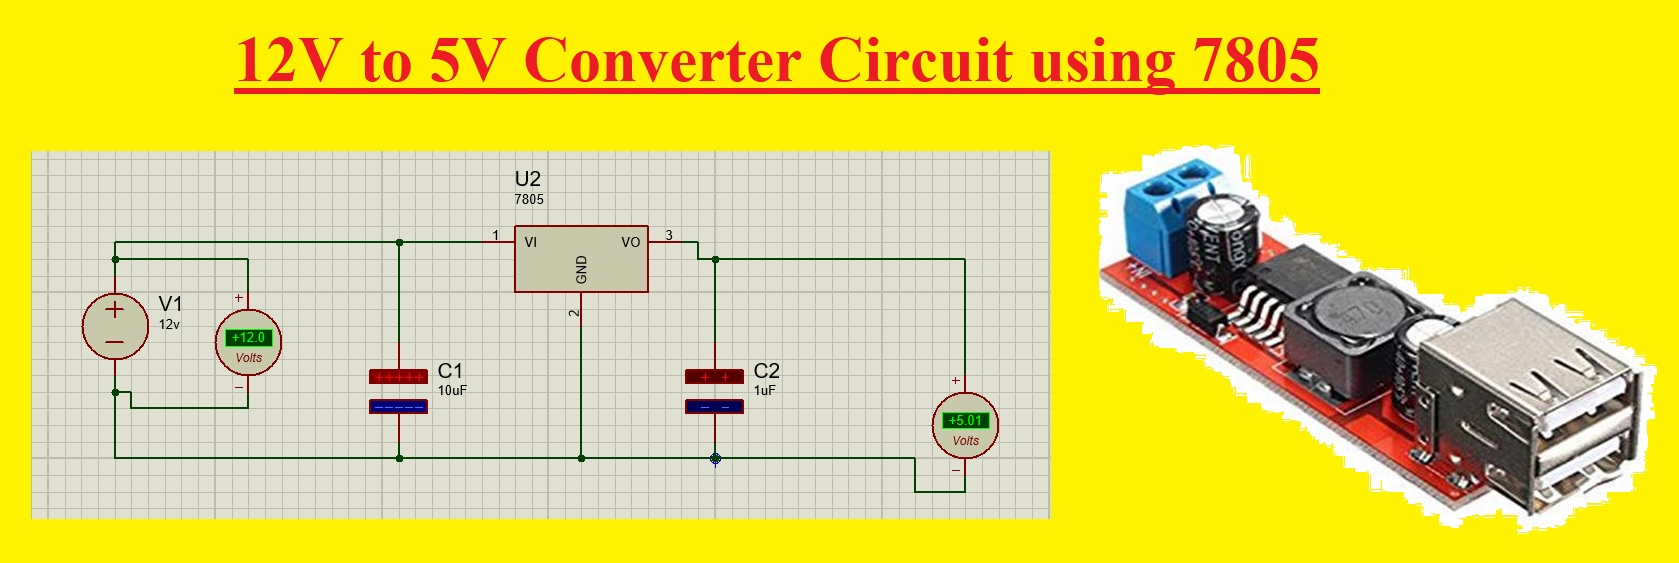 12V to 5V Converter using LM7805 IC - Power Supply